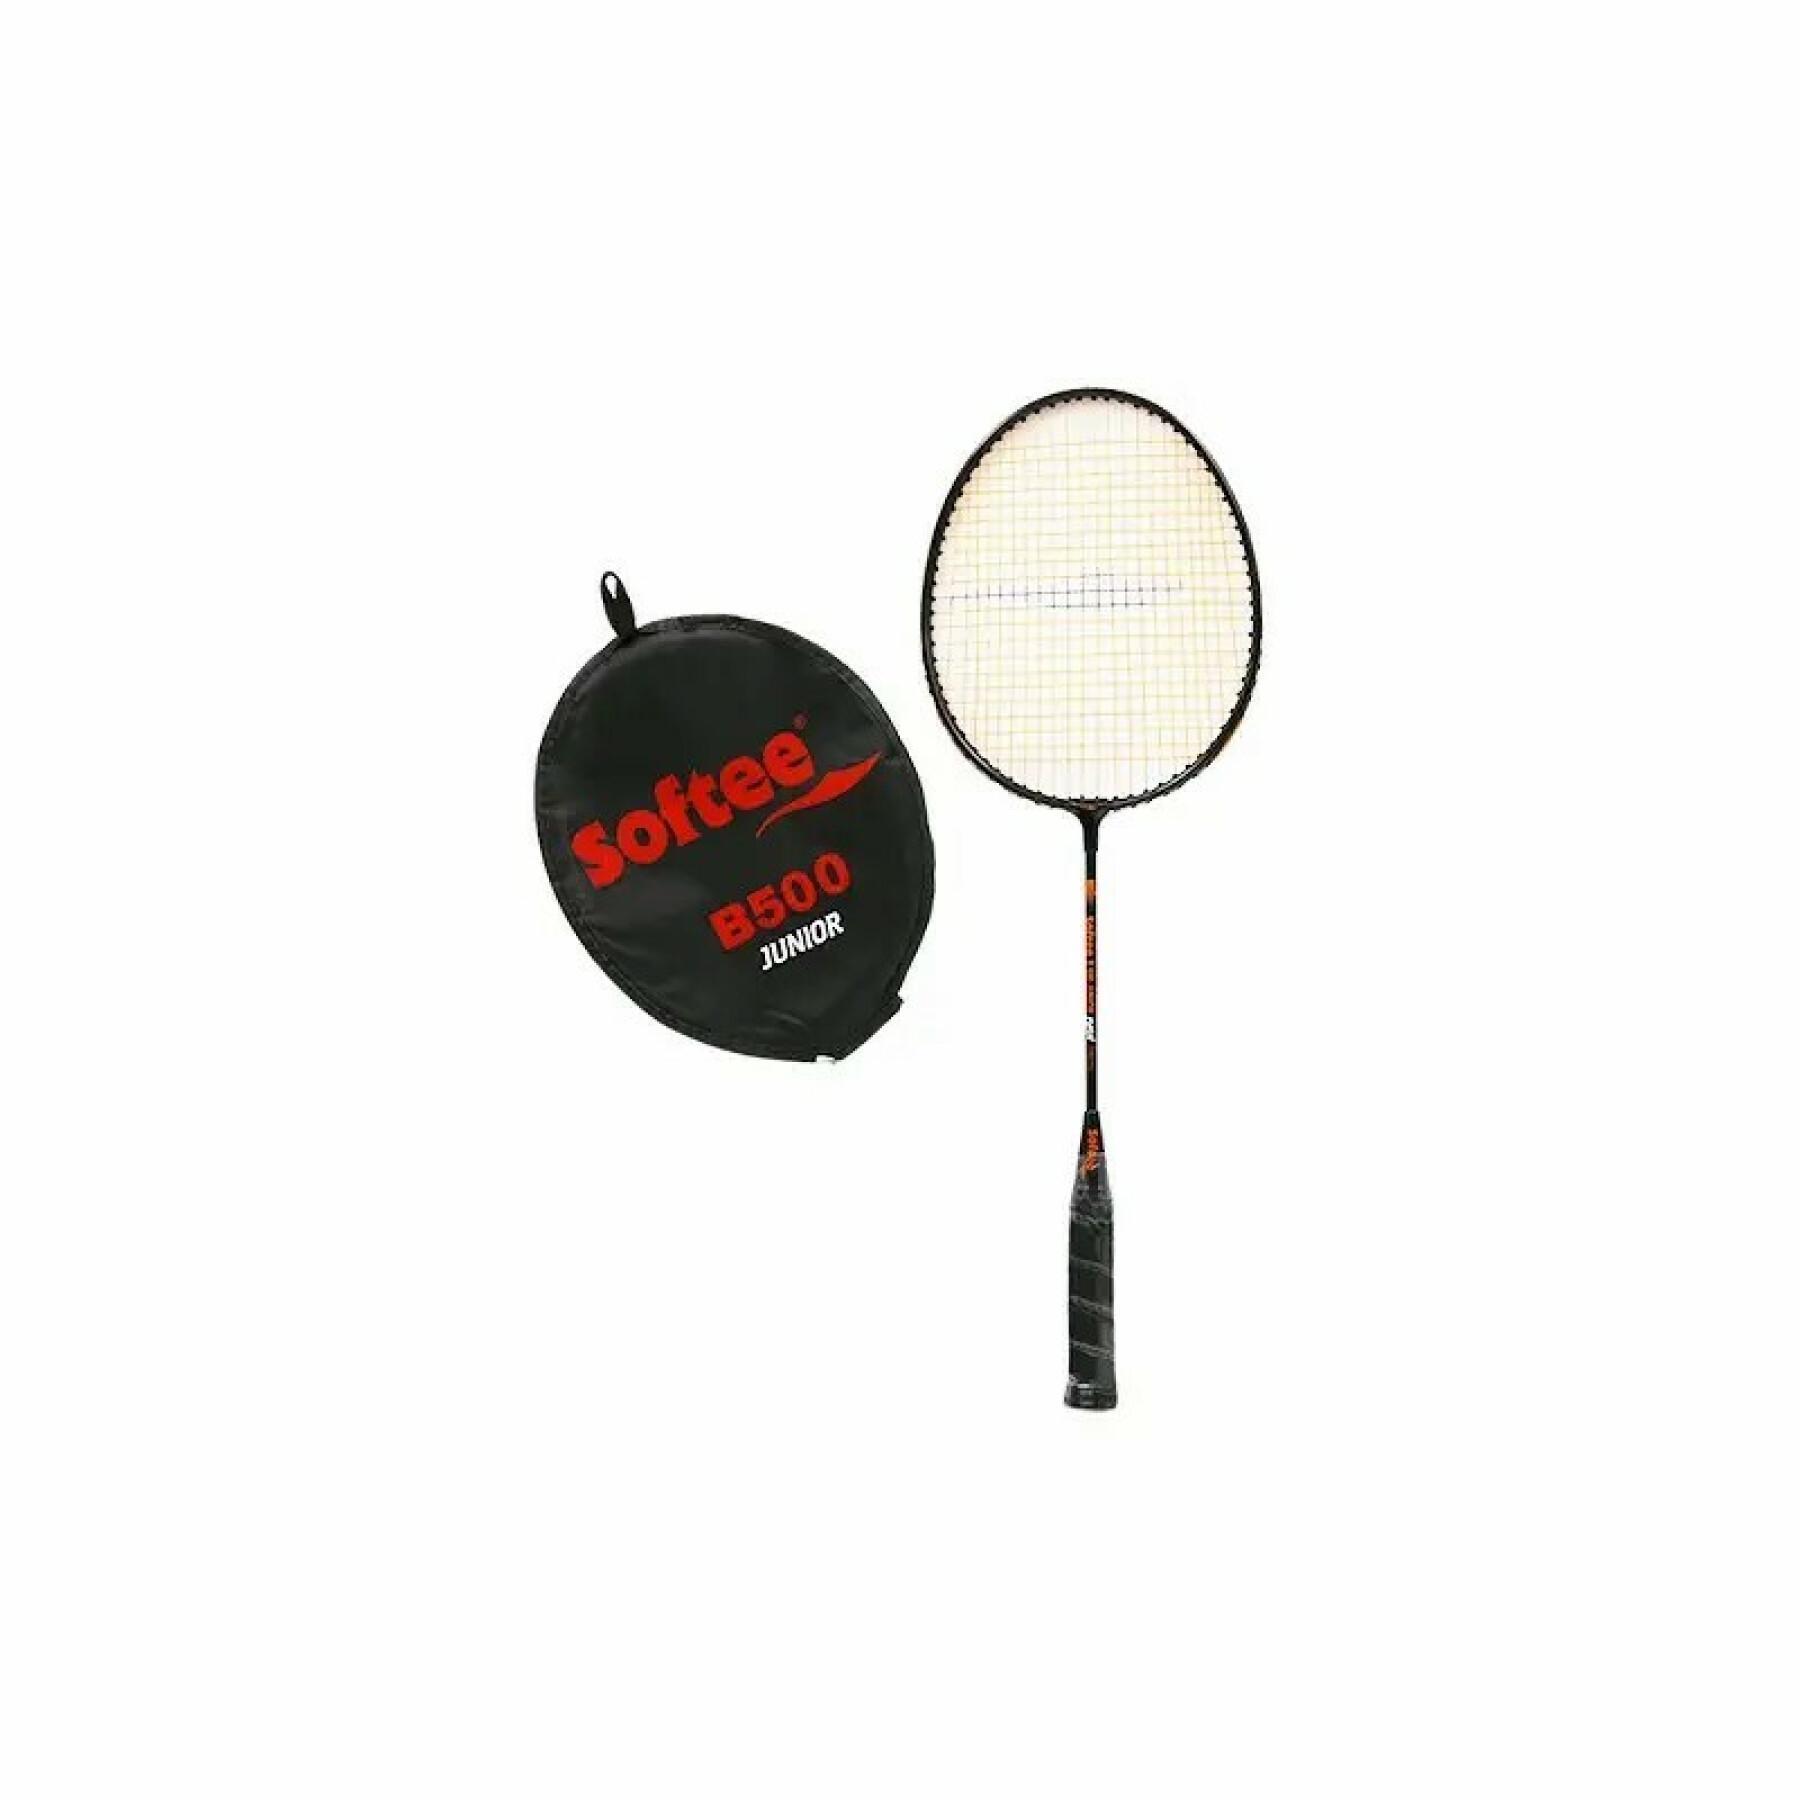 Badmintonschläger Kind Softee B 500